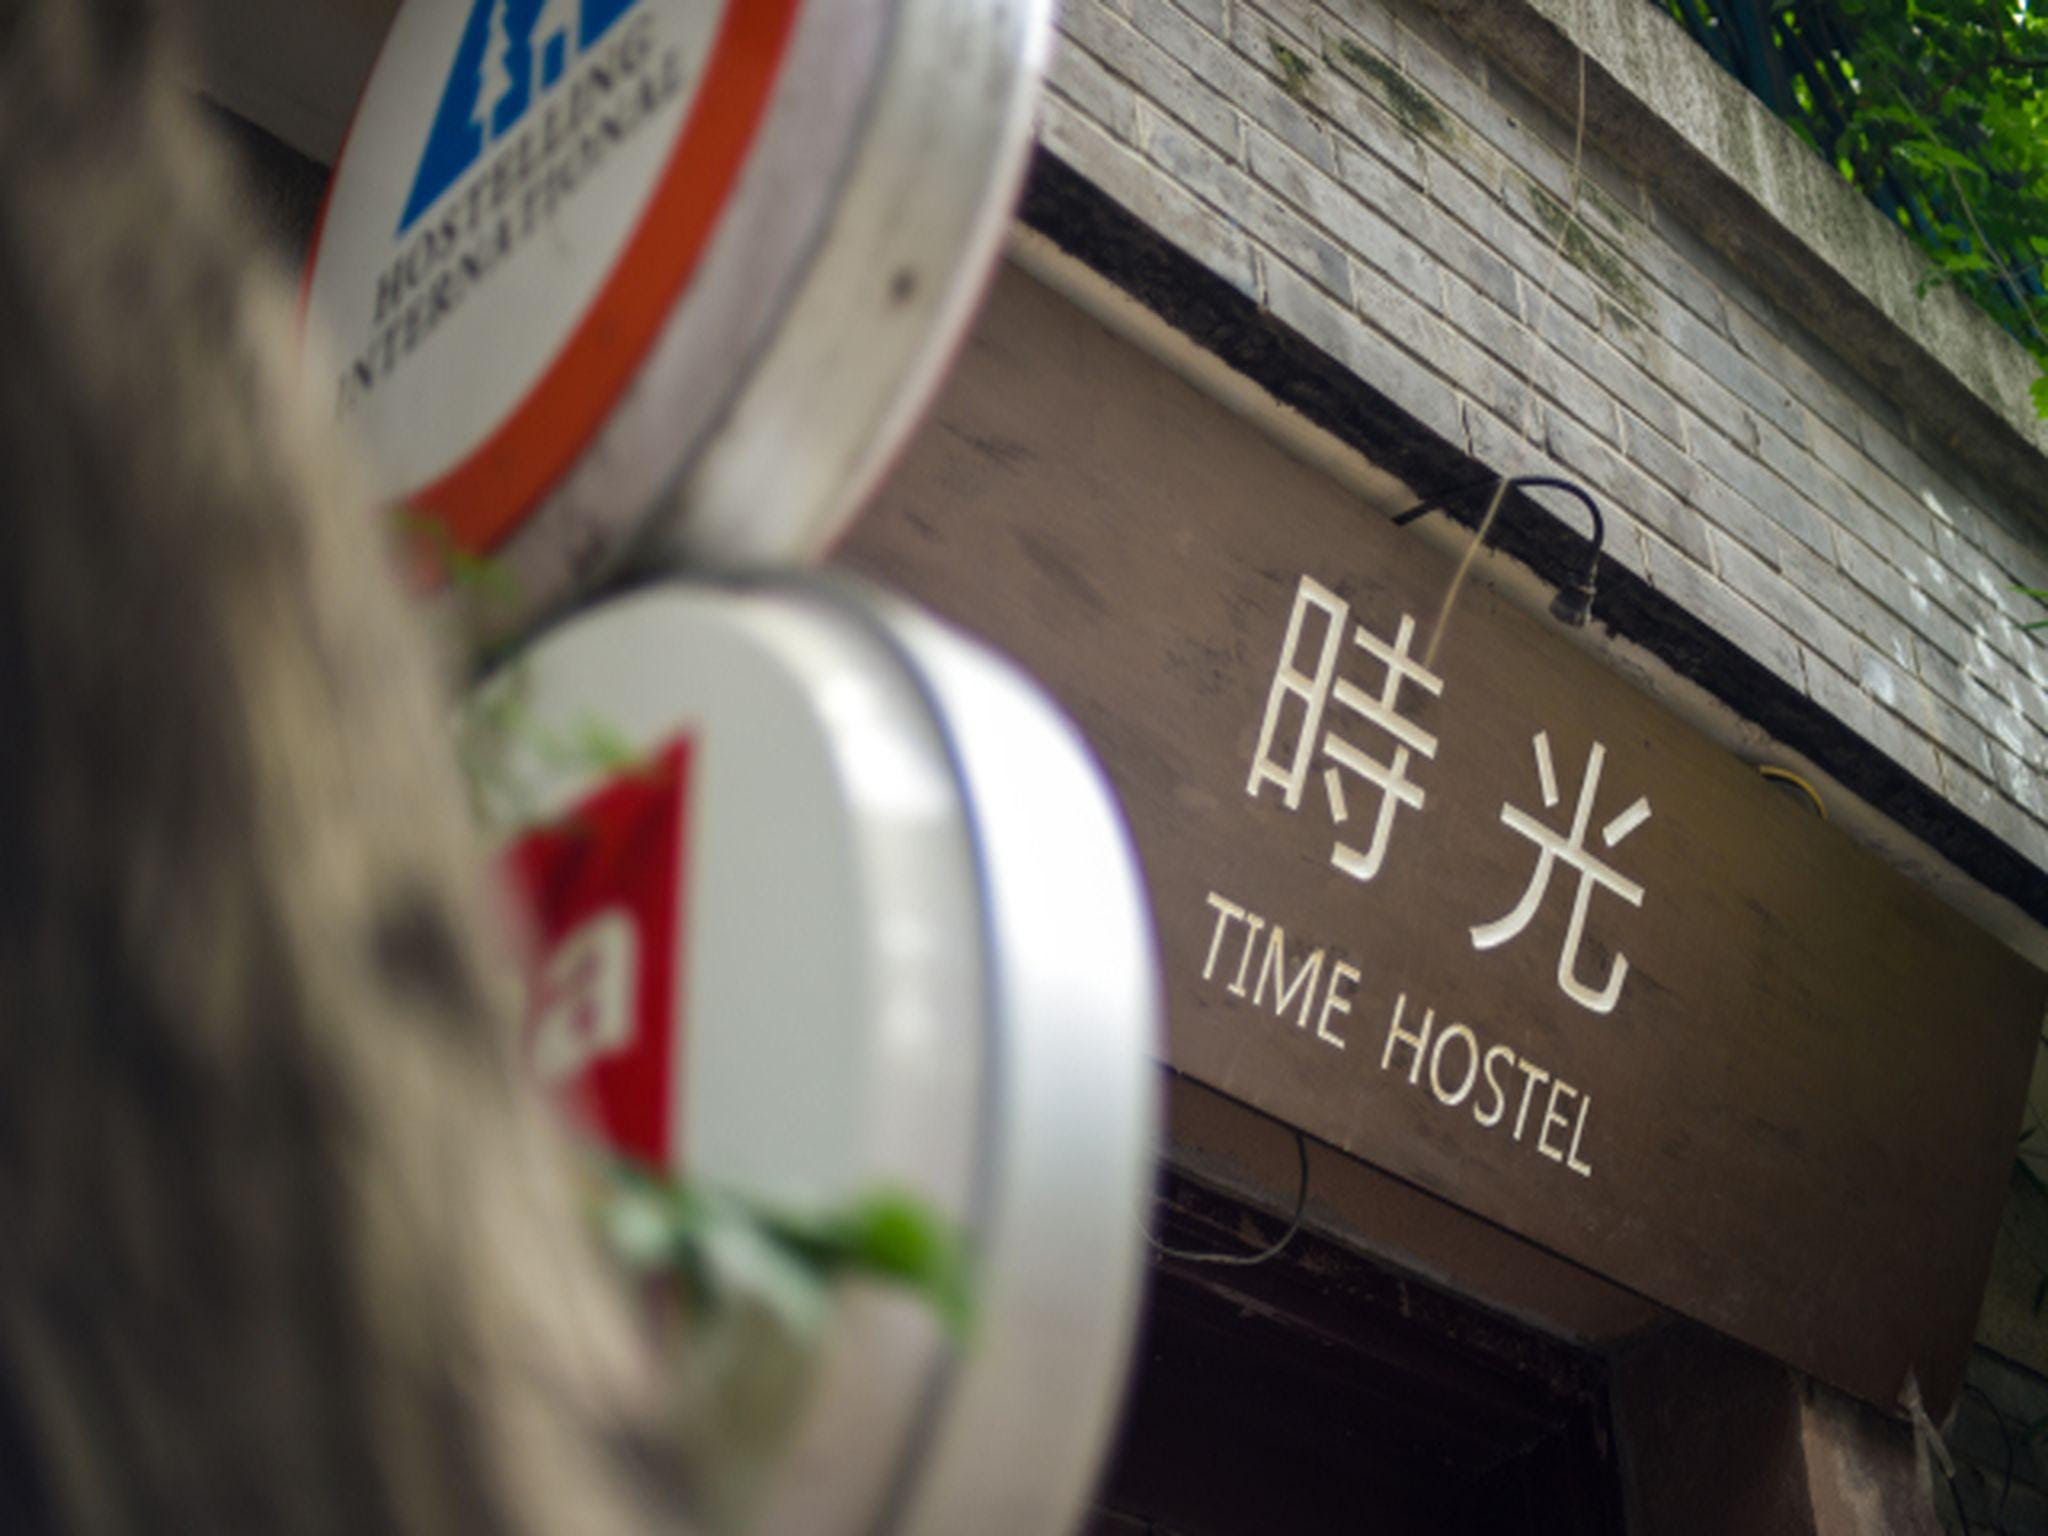 About Nanjing Times Hostel